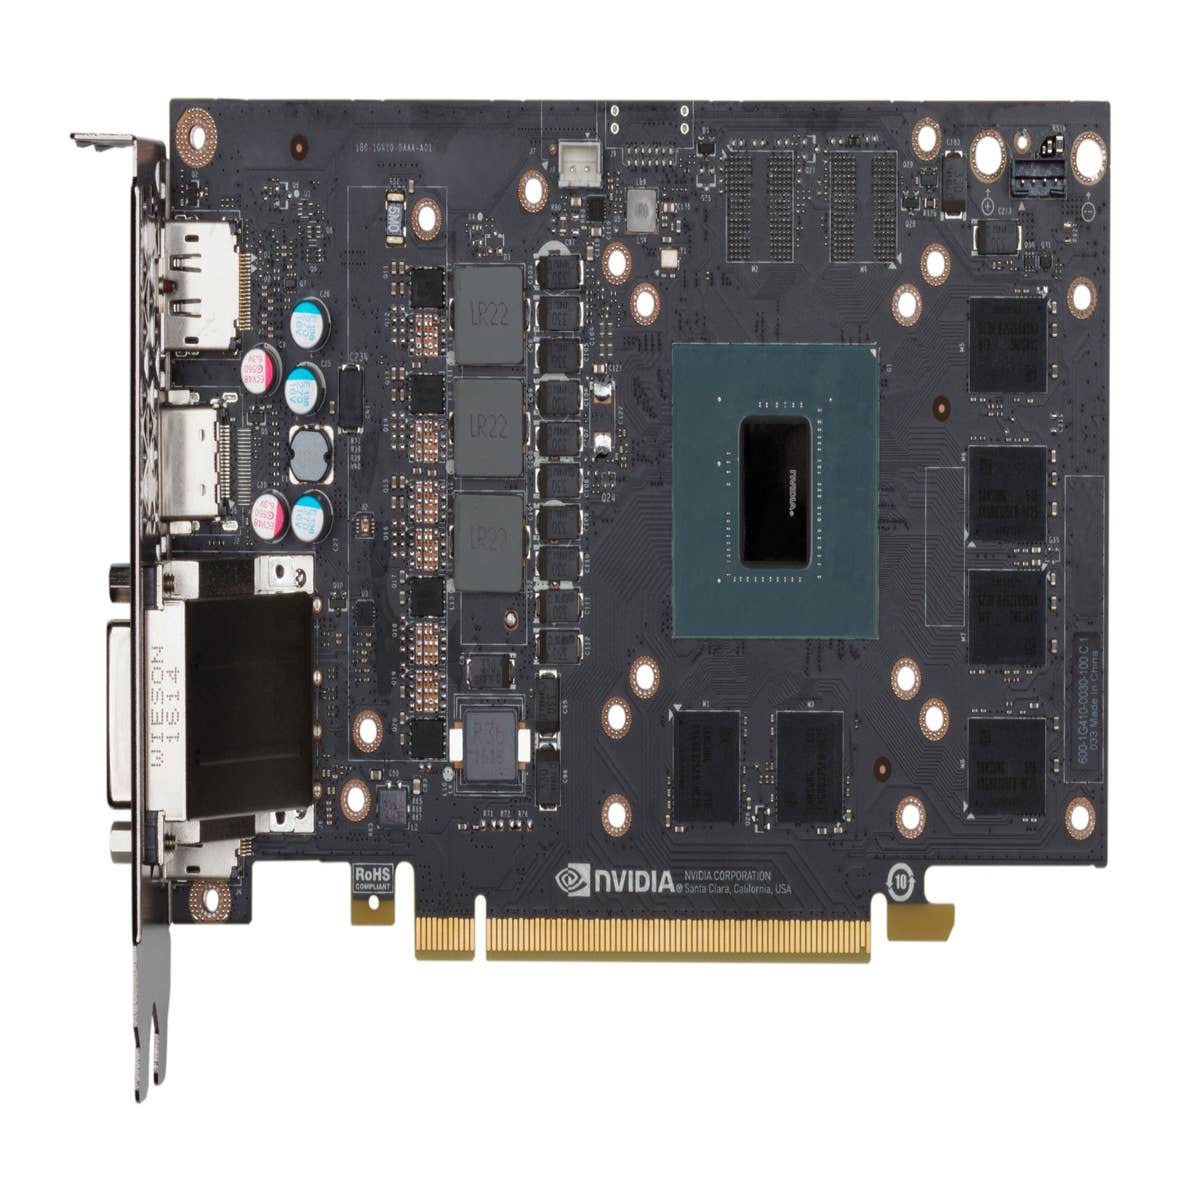 Nvidia GeForce GTX 1060 3GB vs 6GB review